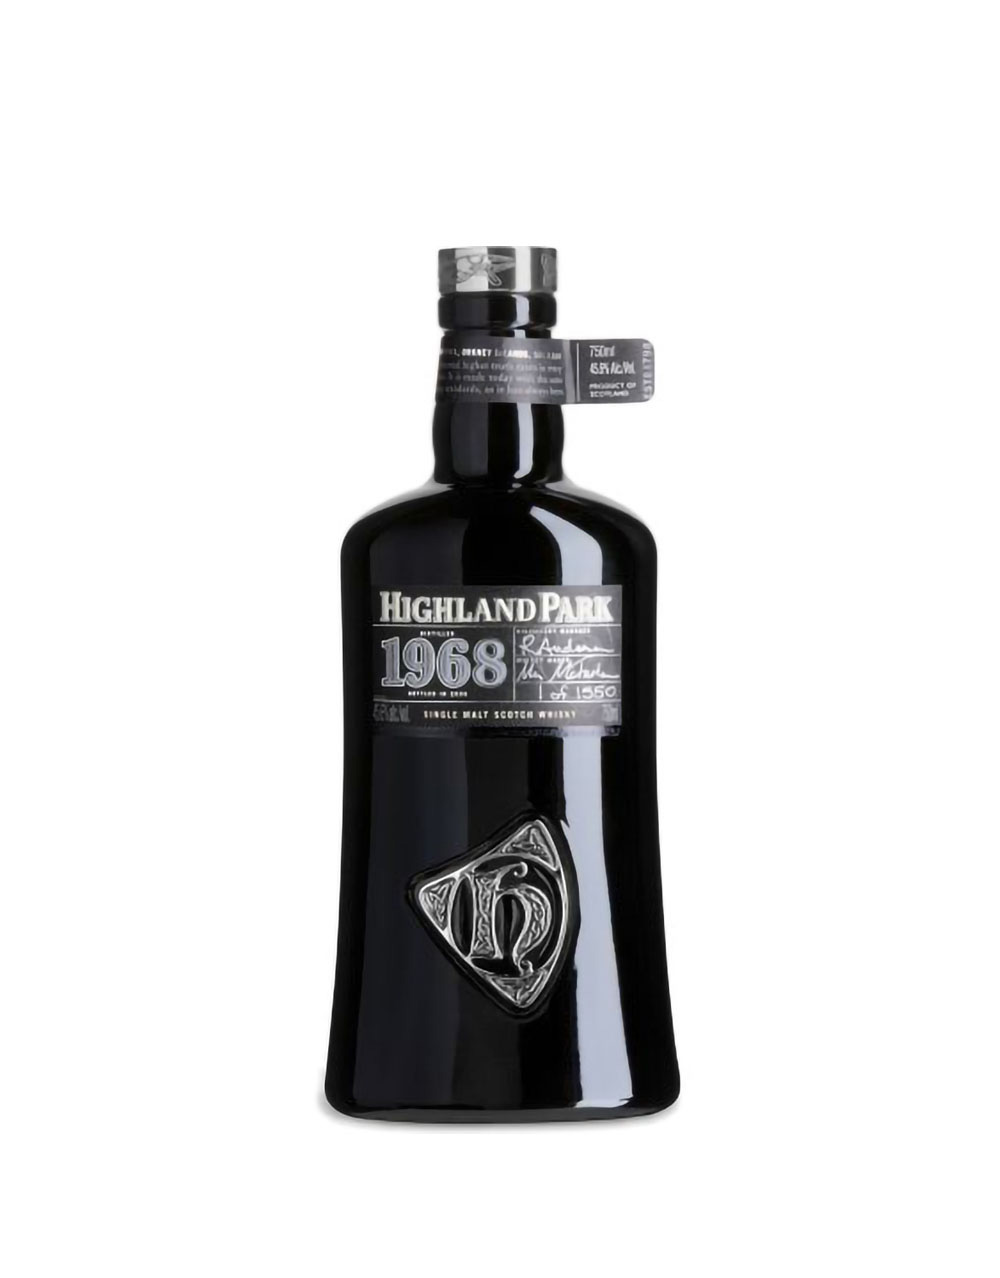 Highland Park 1968 Orcadian Vintage Single Malt Scotch Whisky